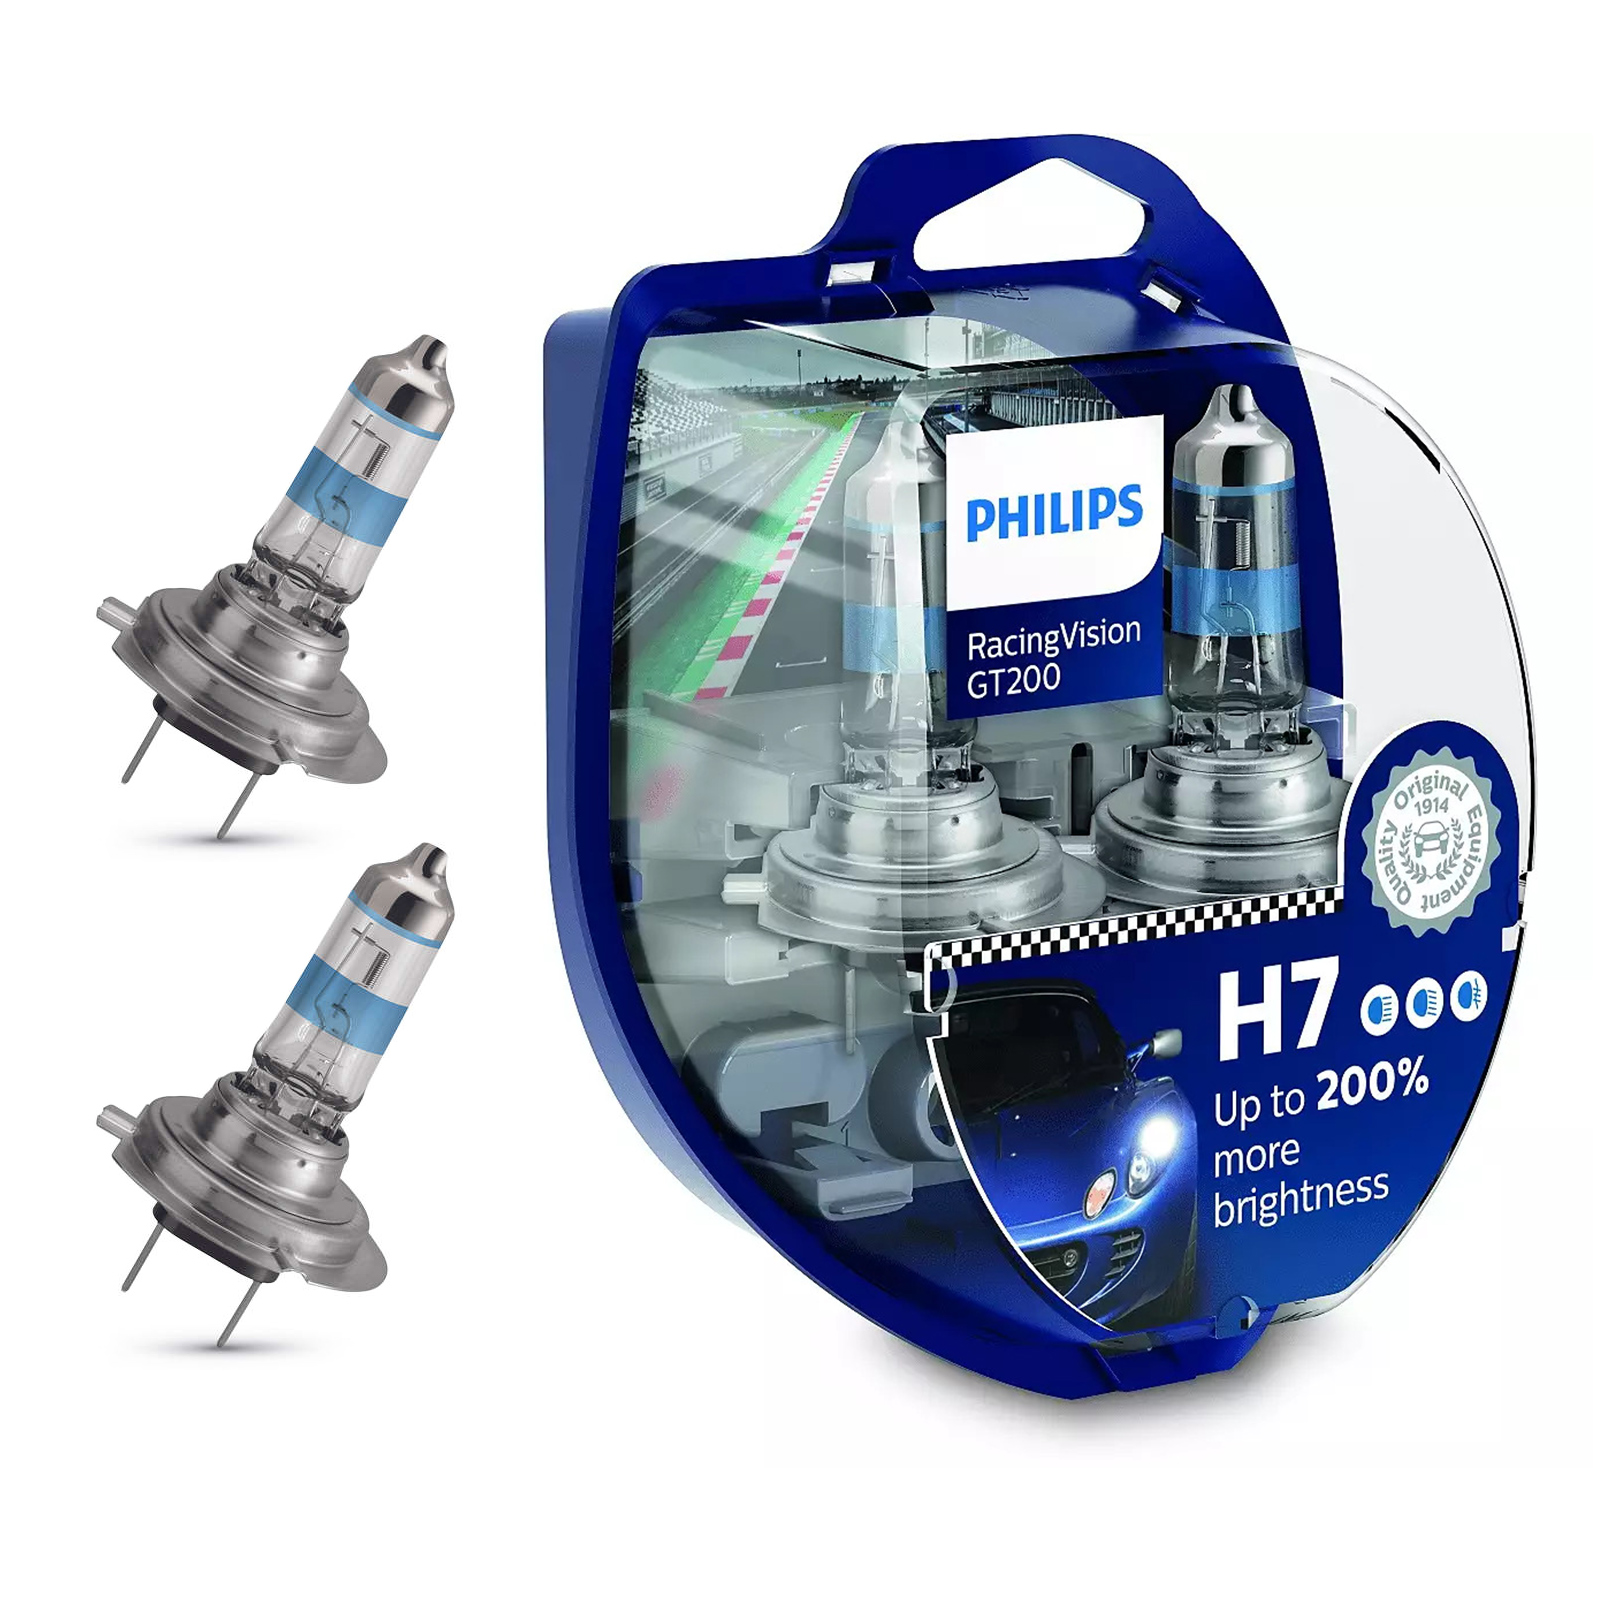 2x Philips H7 Racing Vision GT200 LAMPADE AUTO lampadine potenti +200% luce